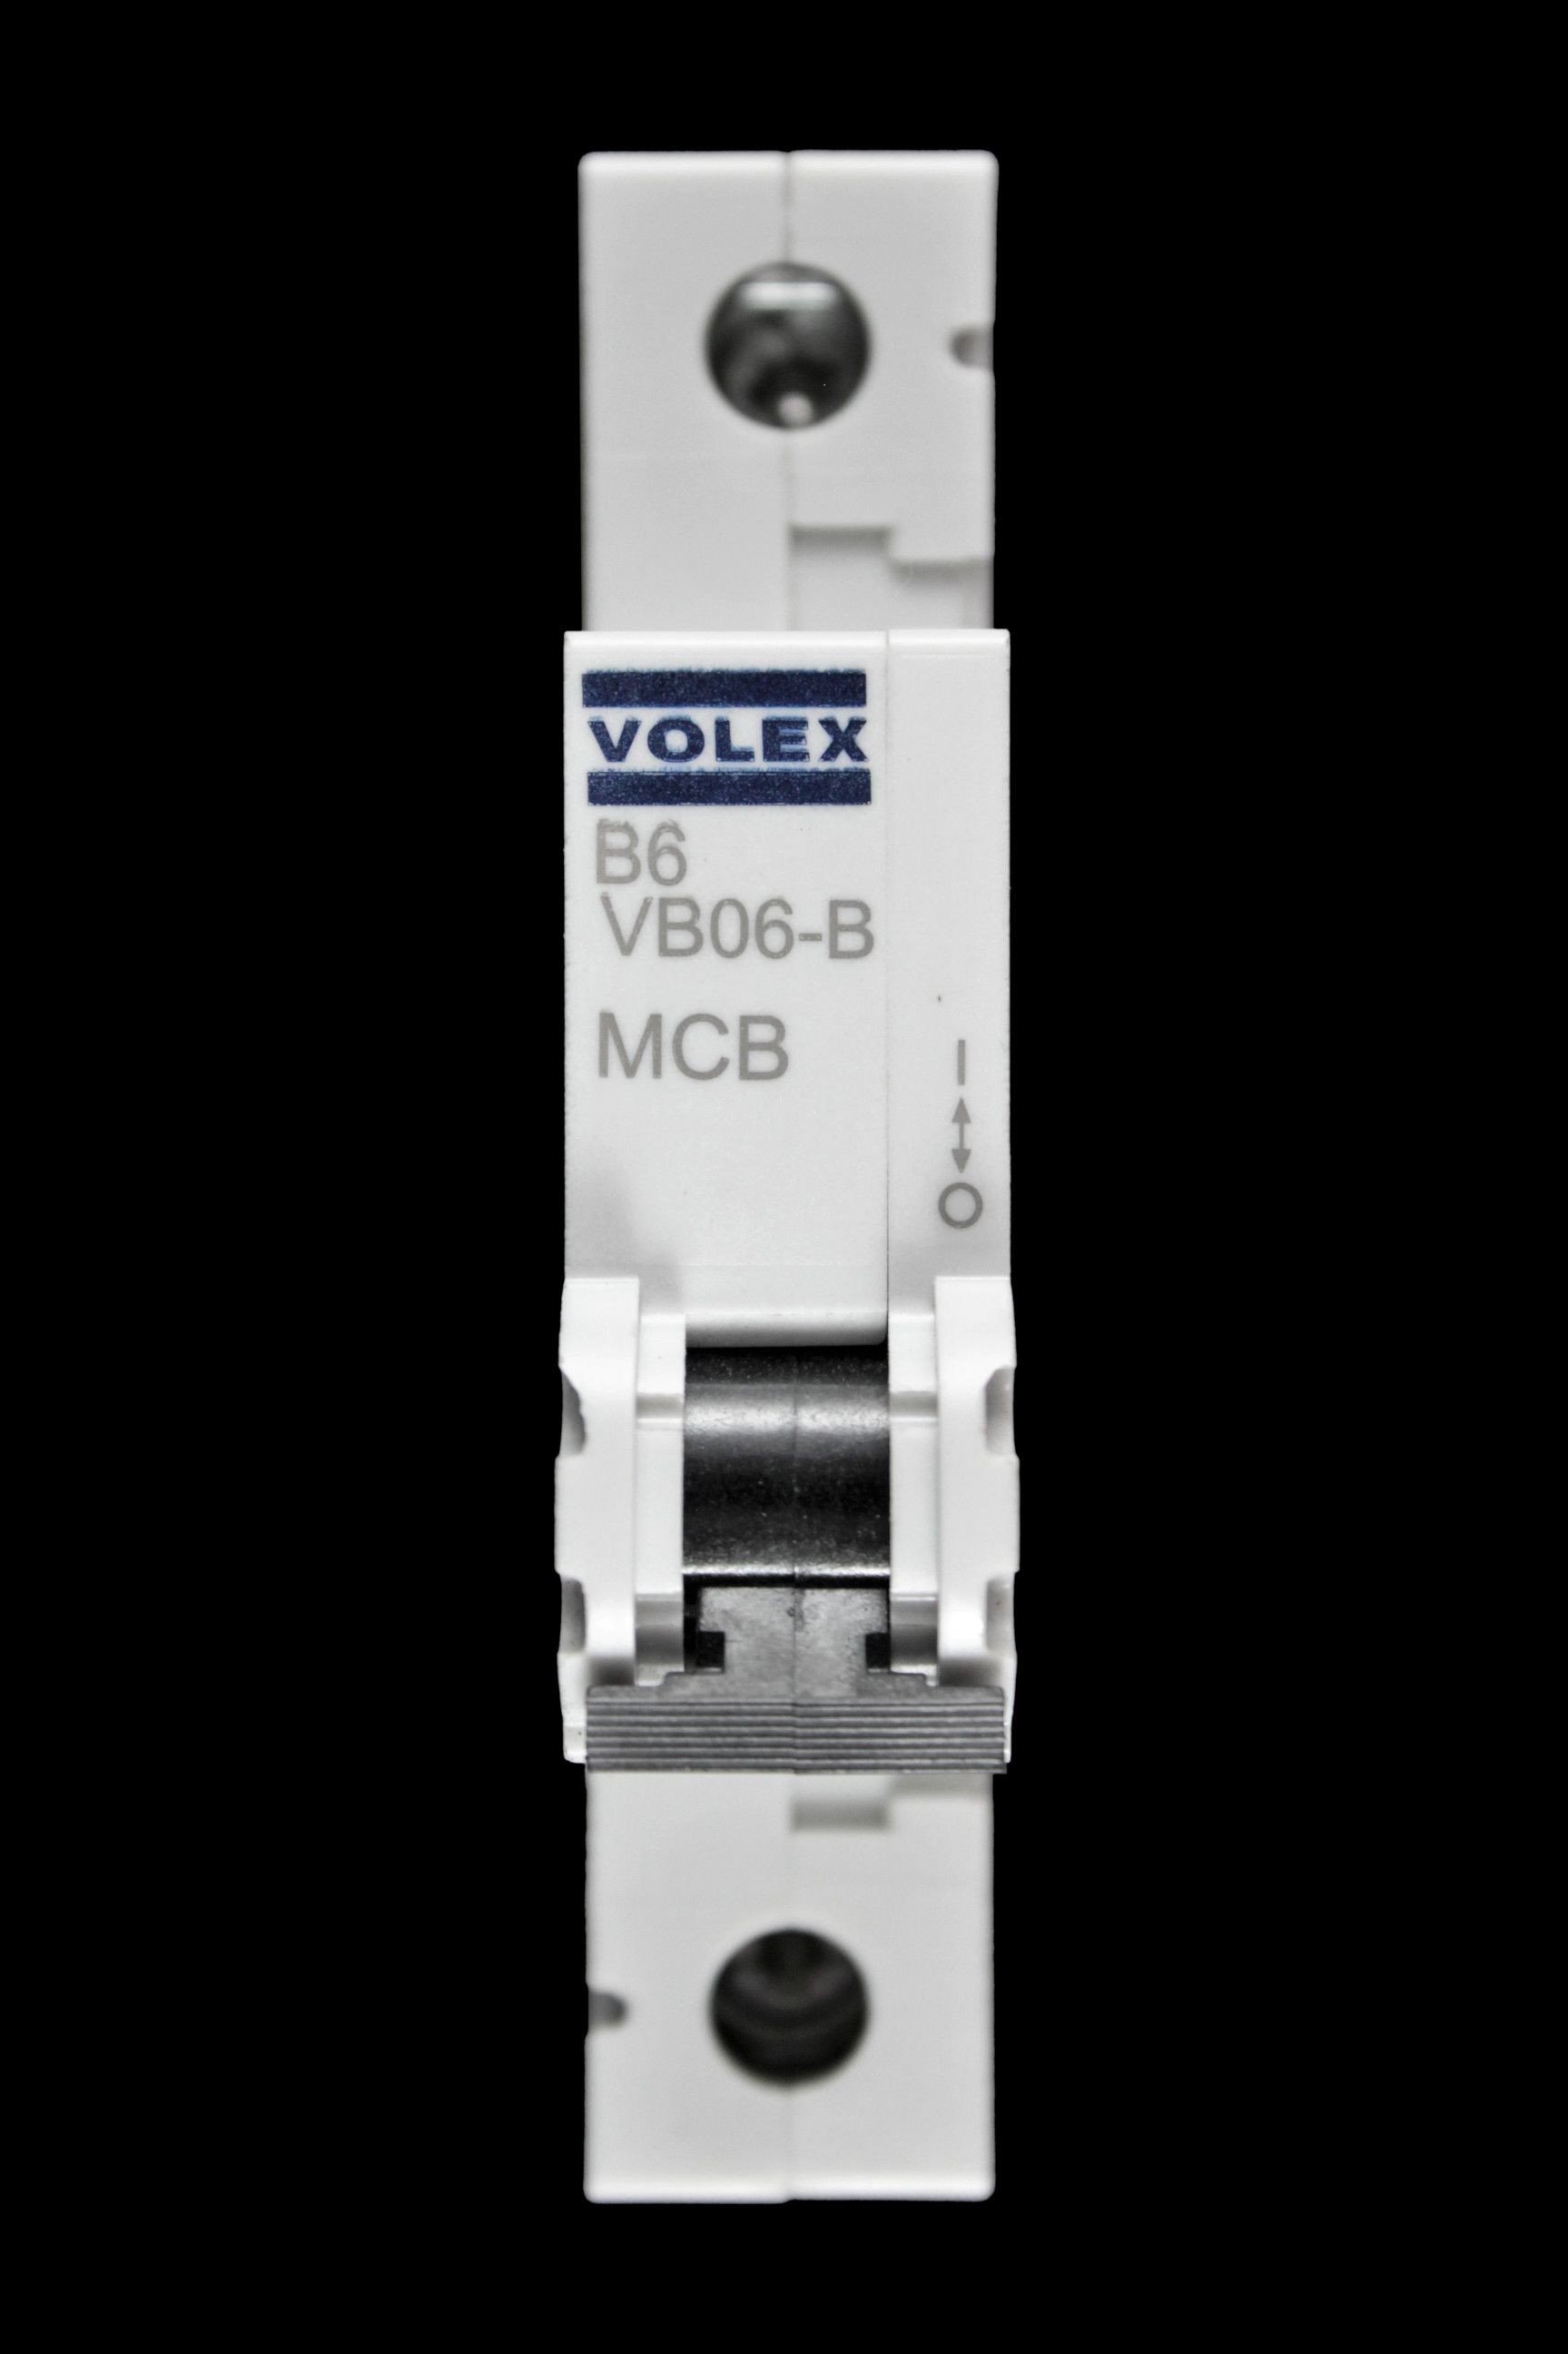 VOLEX 6 AMP CURVE B 6kA MCB CIRCUIT BREAKER VB06-B